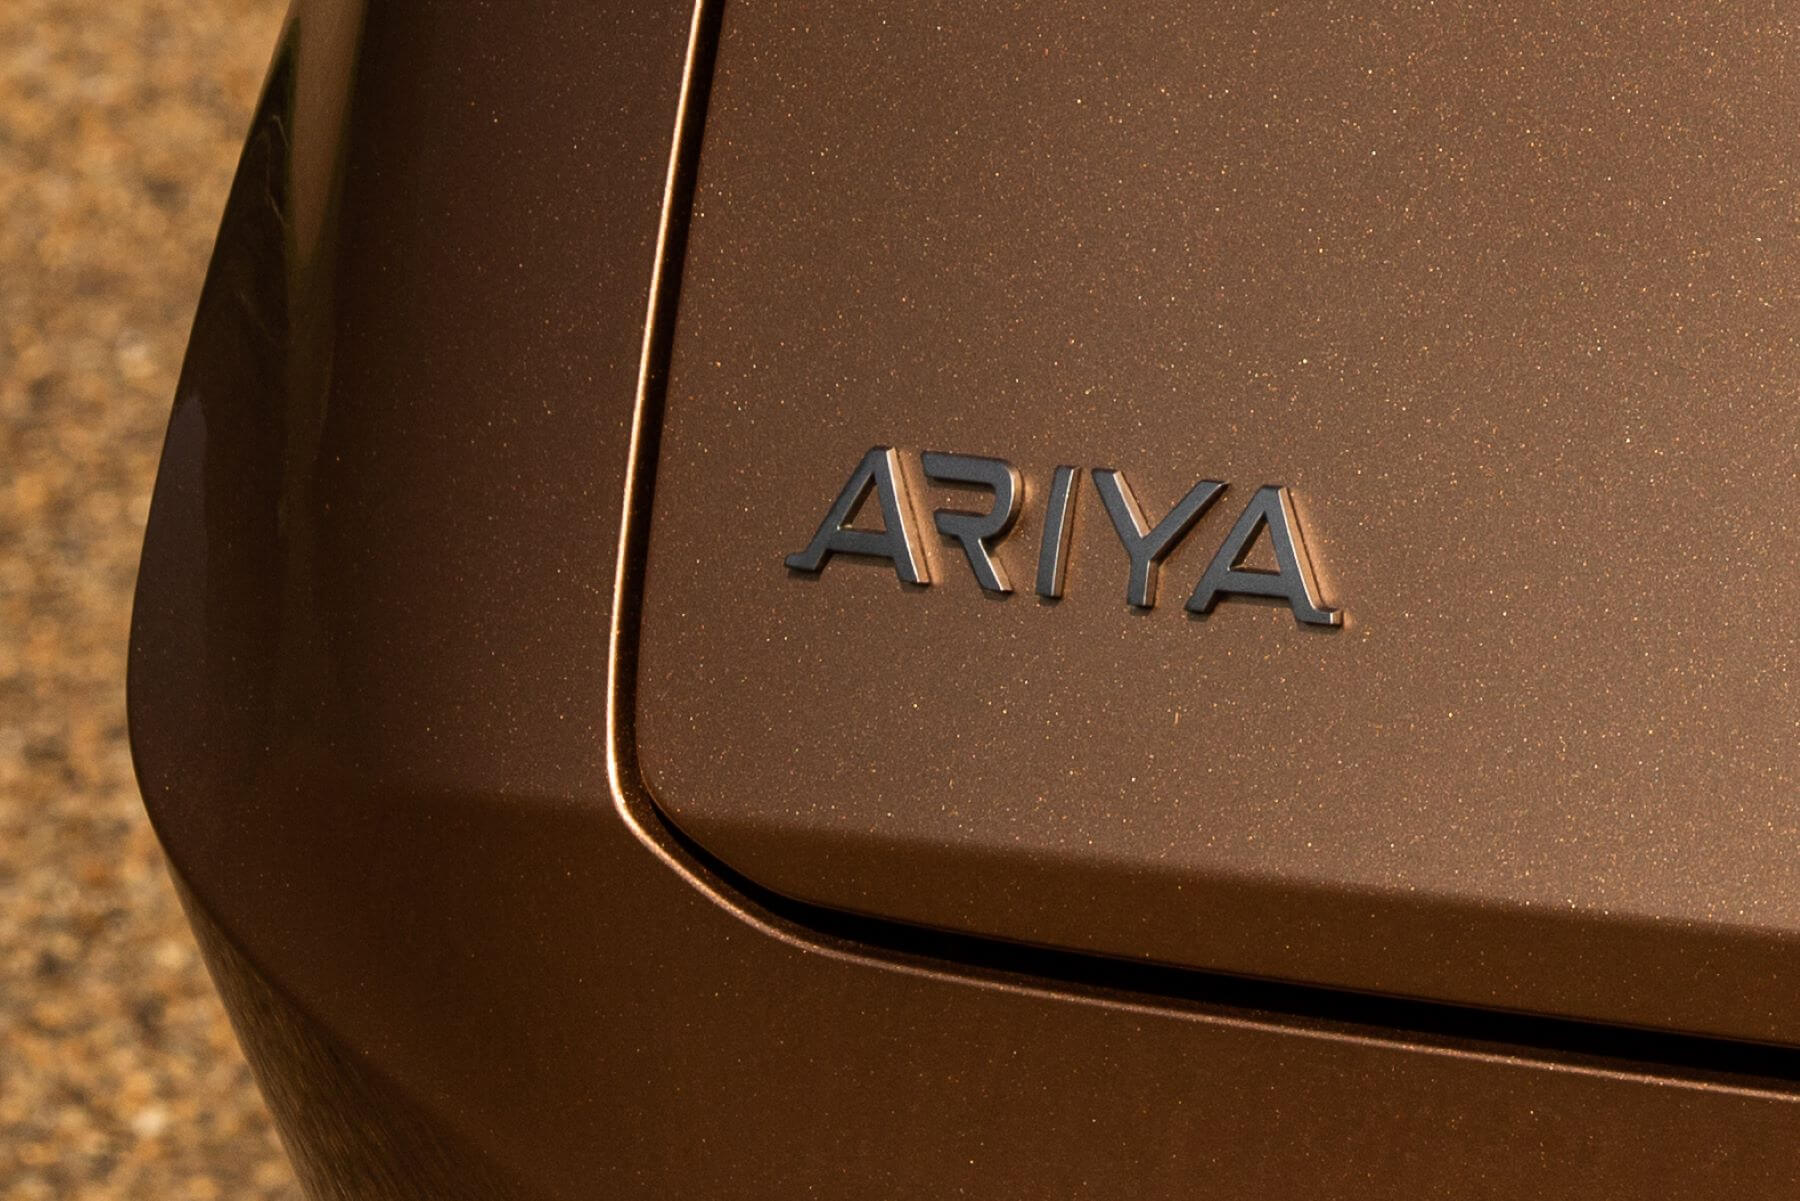 Rear Ariya model badging on the trunk of a bronze 2023 Nissan Airya all-electric (EV) compact SUV model